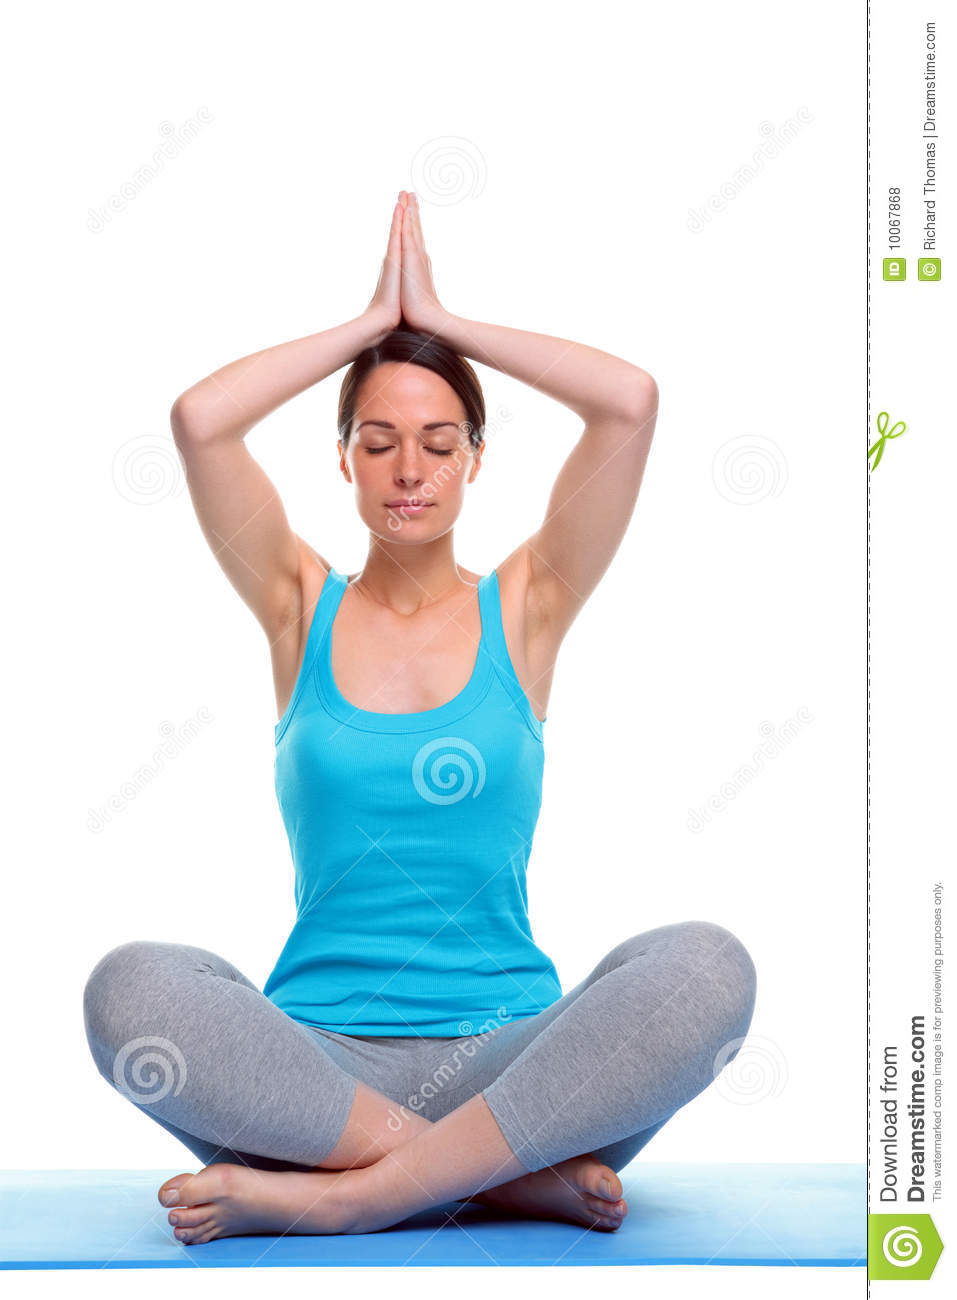 woman-yoga-meditation-pose-10067868